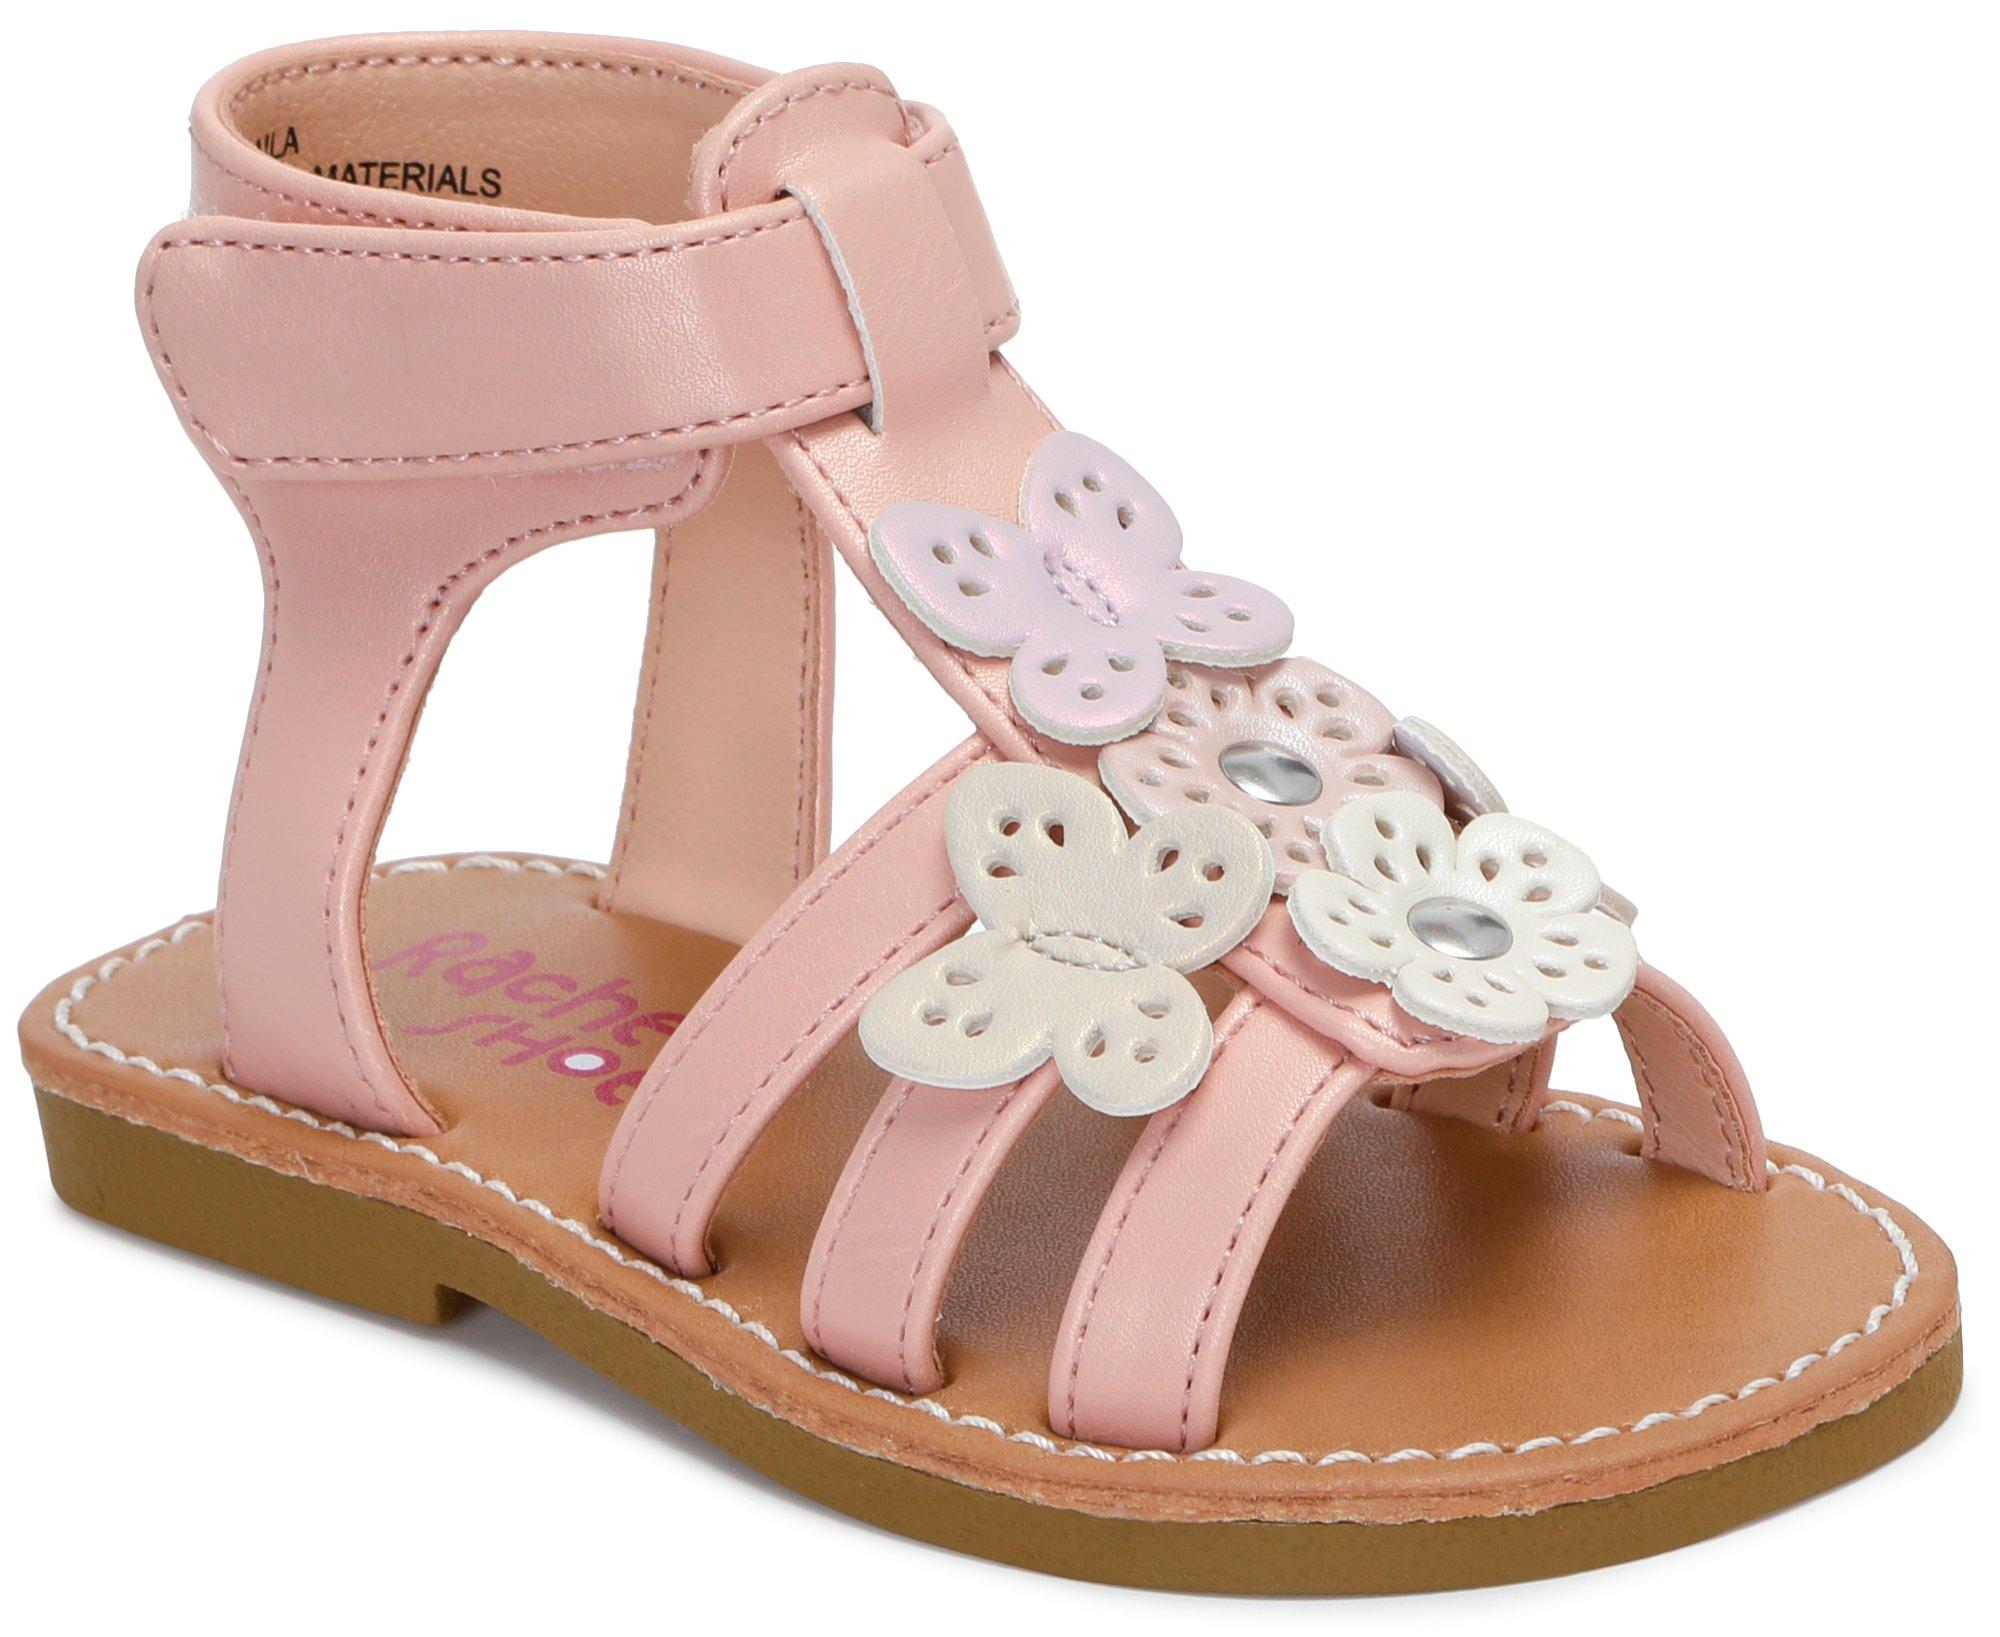 Toddler Girls Butterfly Gladiator Sandals